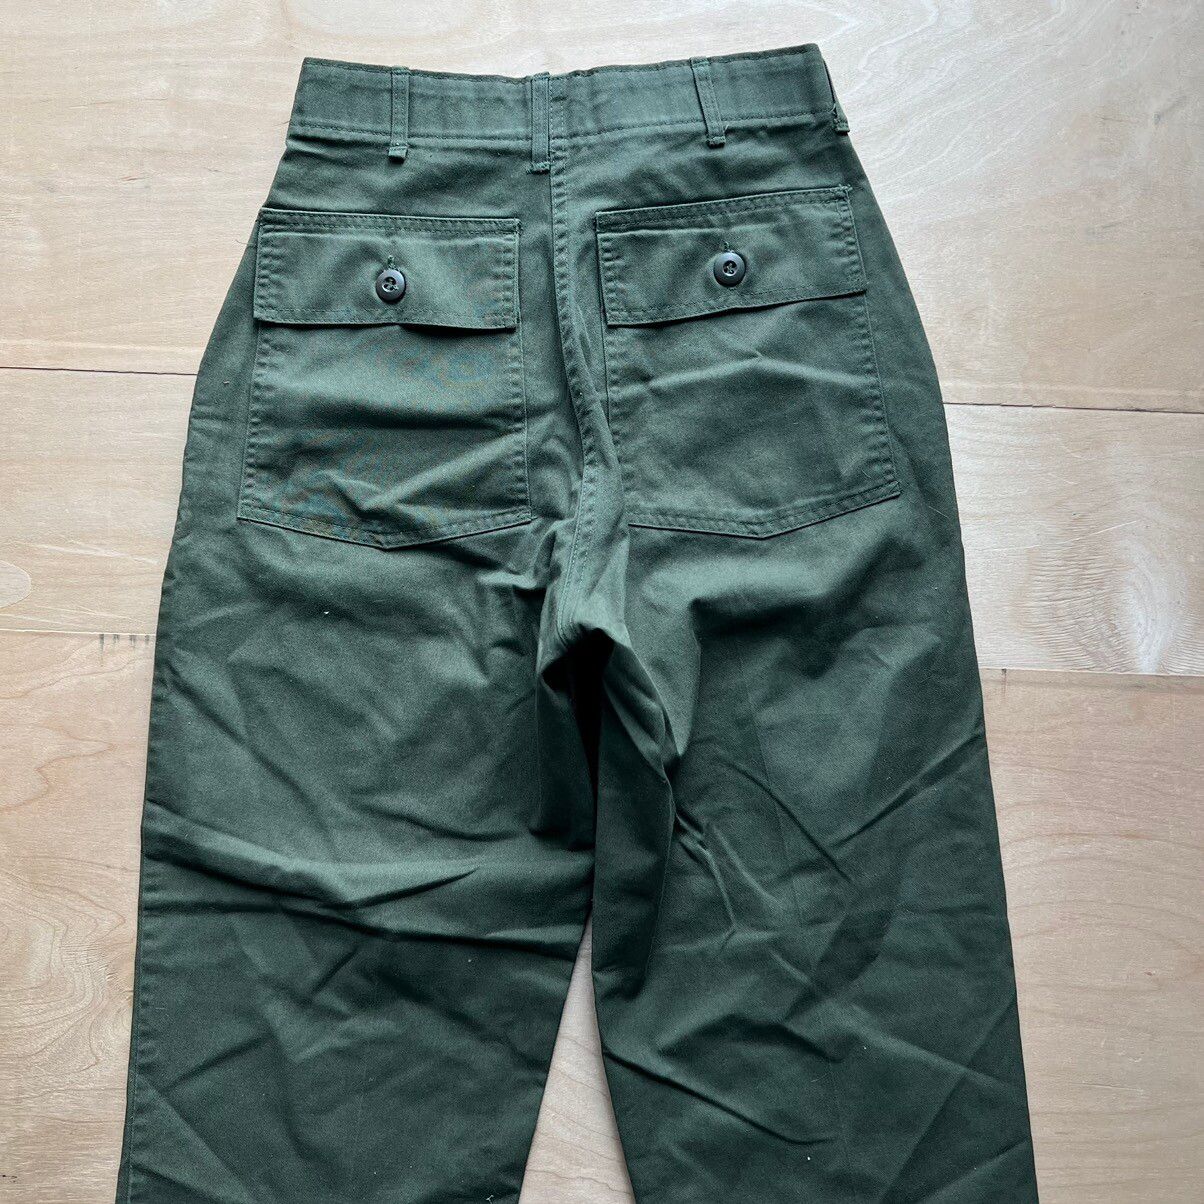 Vintage Vintage Military OG 507 Pants 26x28.5 Green Army Workwear Size US 26 / EU 42 - 8 Thumbnail